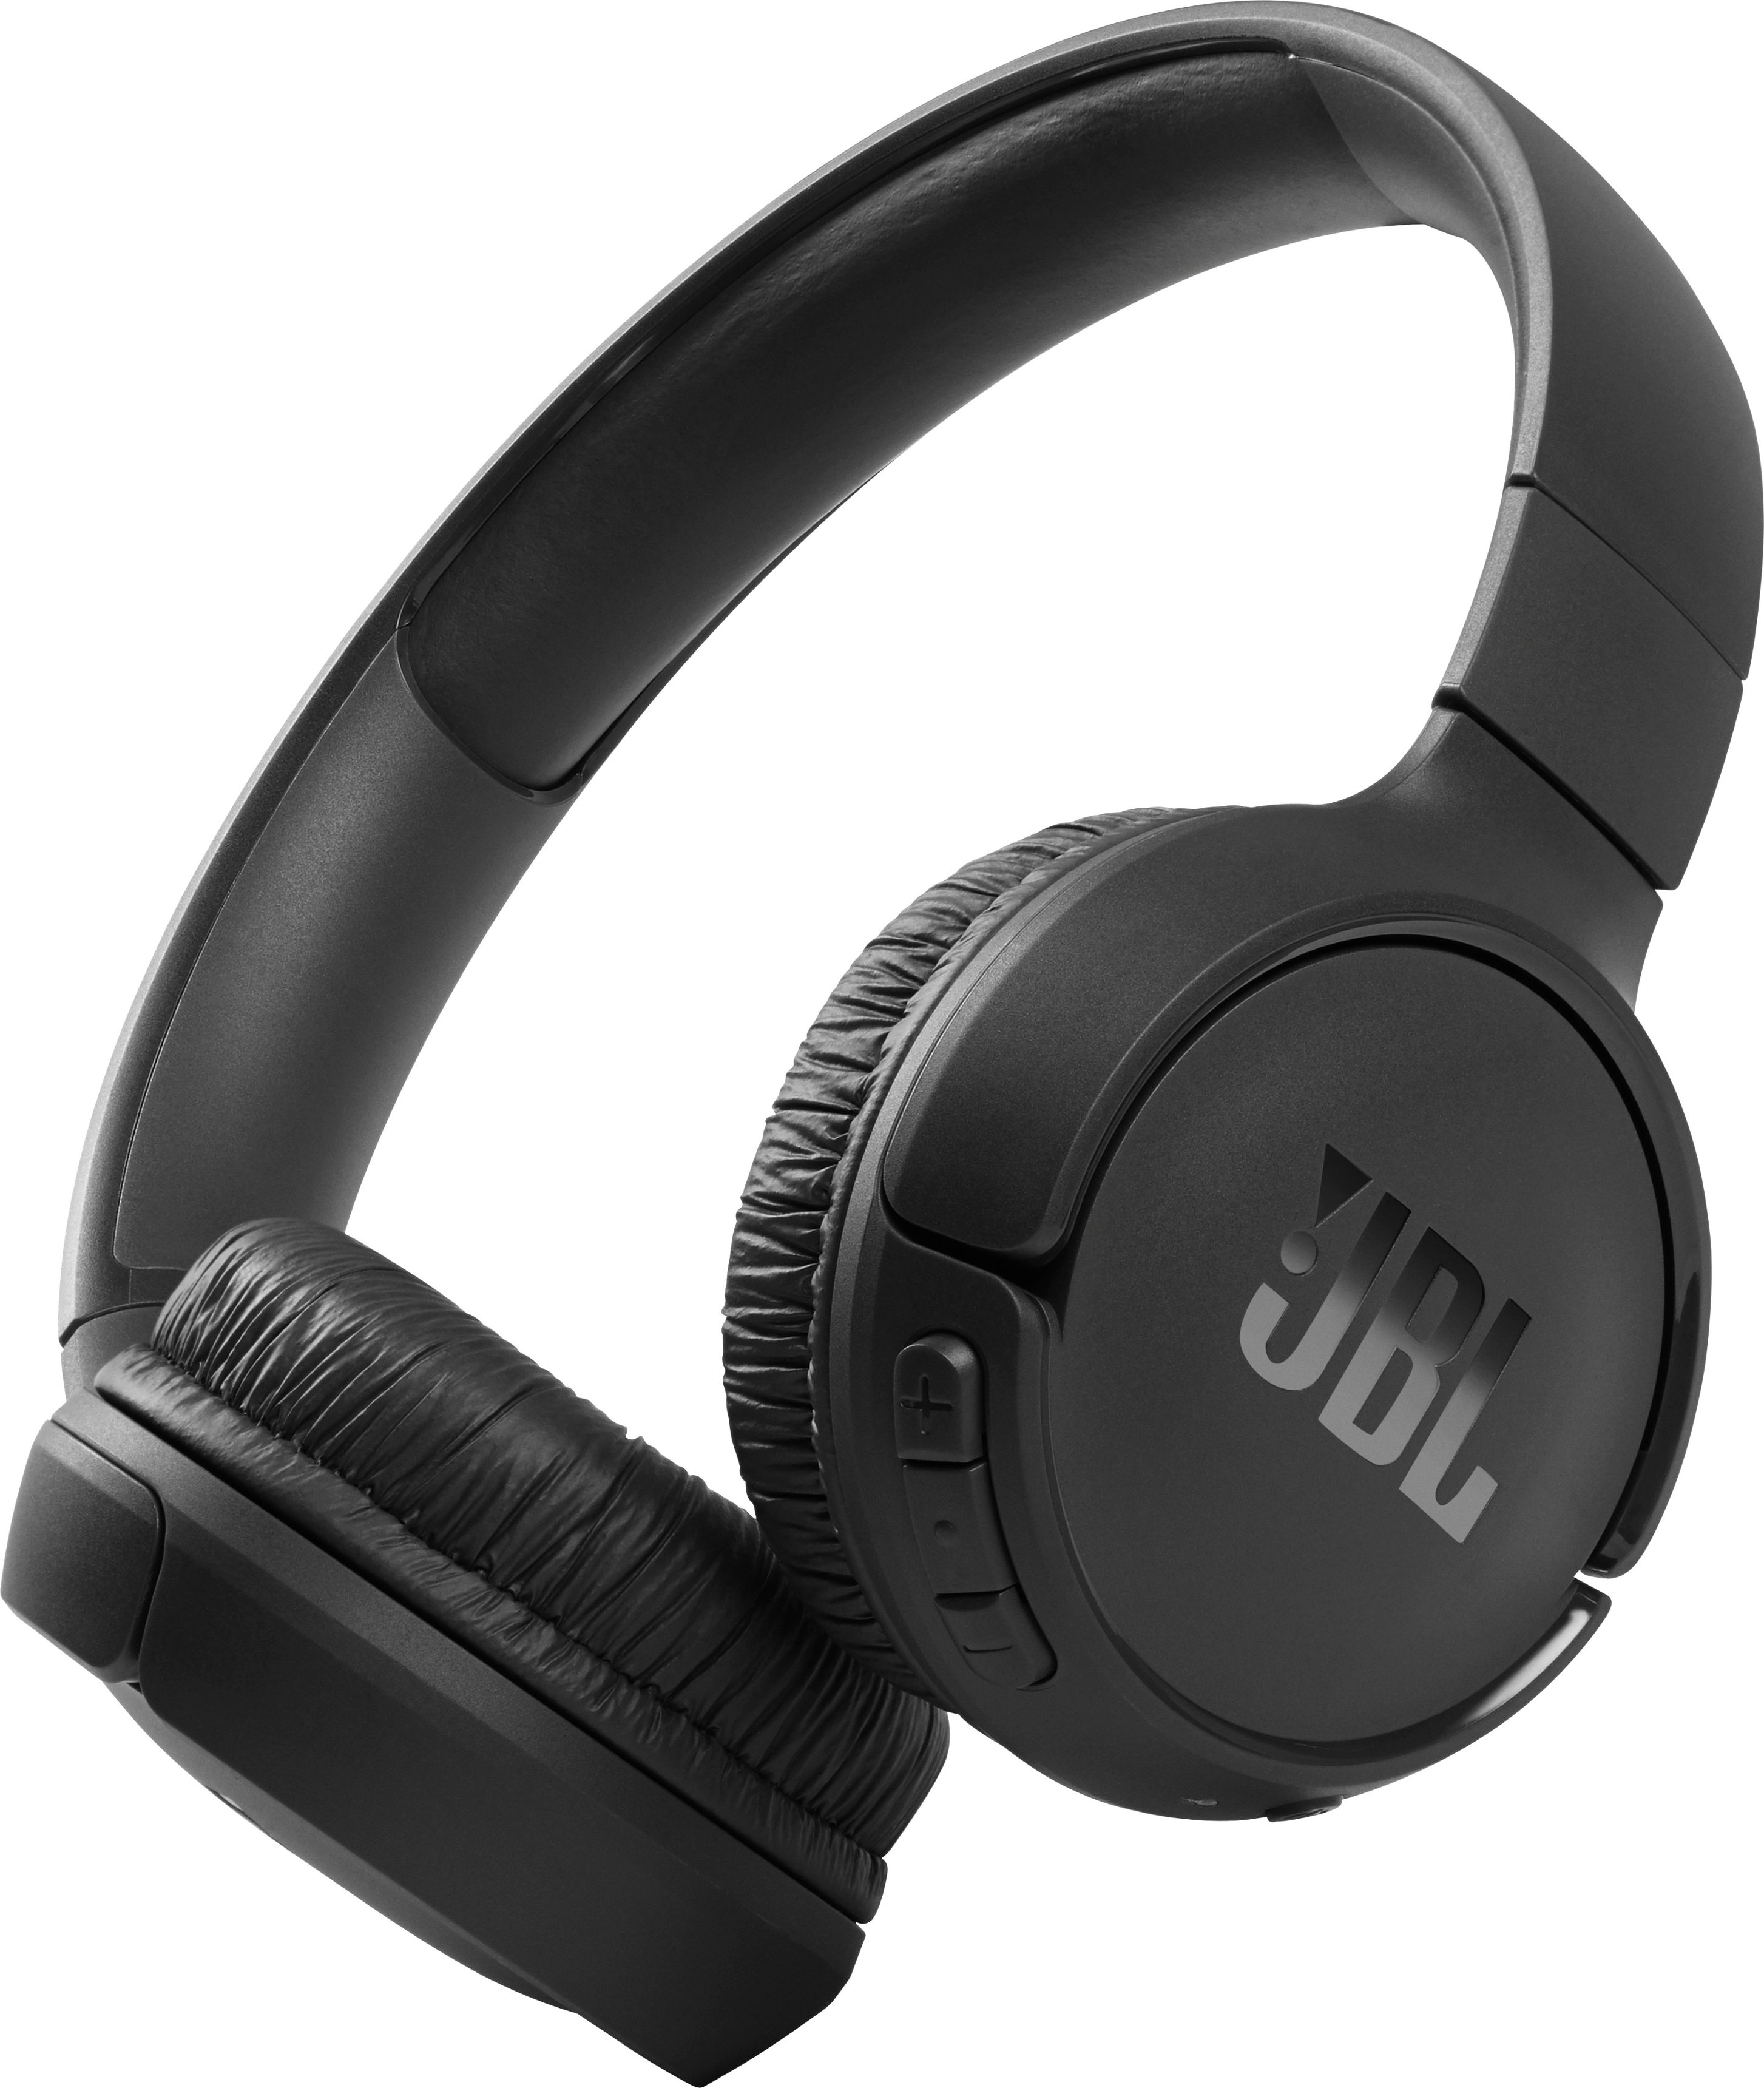 Angle View: JBL - Tune 510BT Wireless On-Ear Headphones - Black